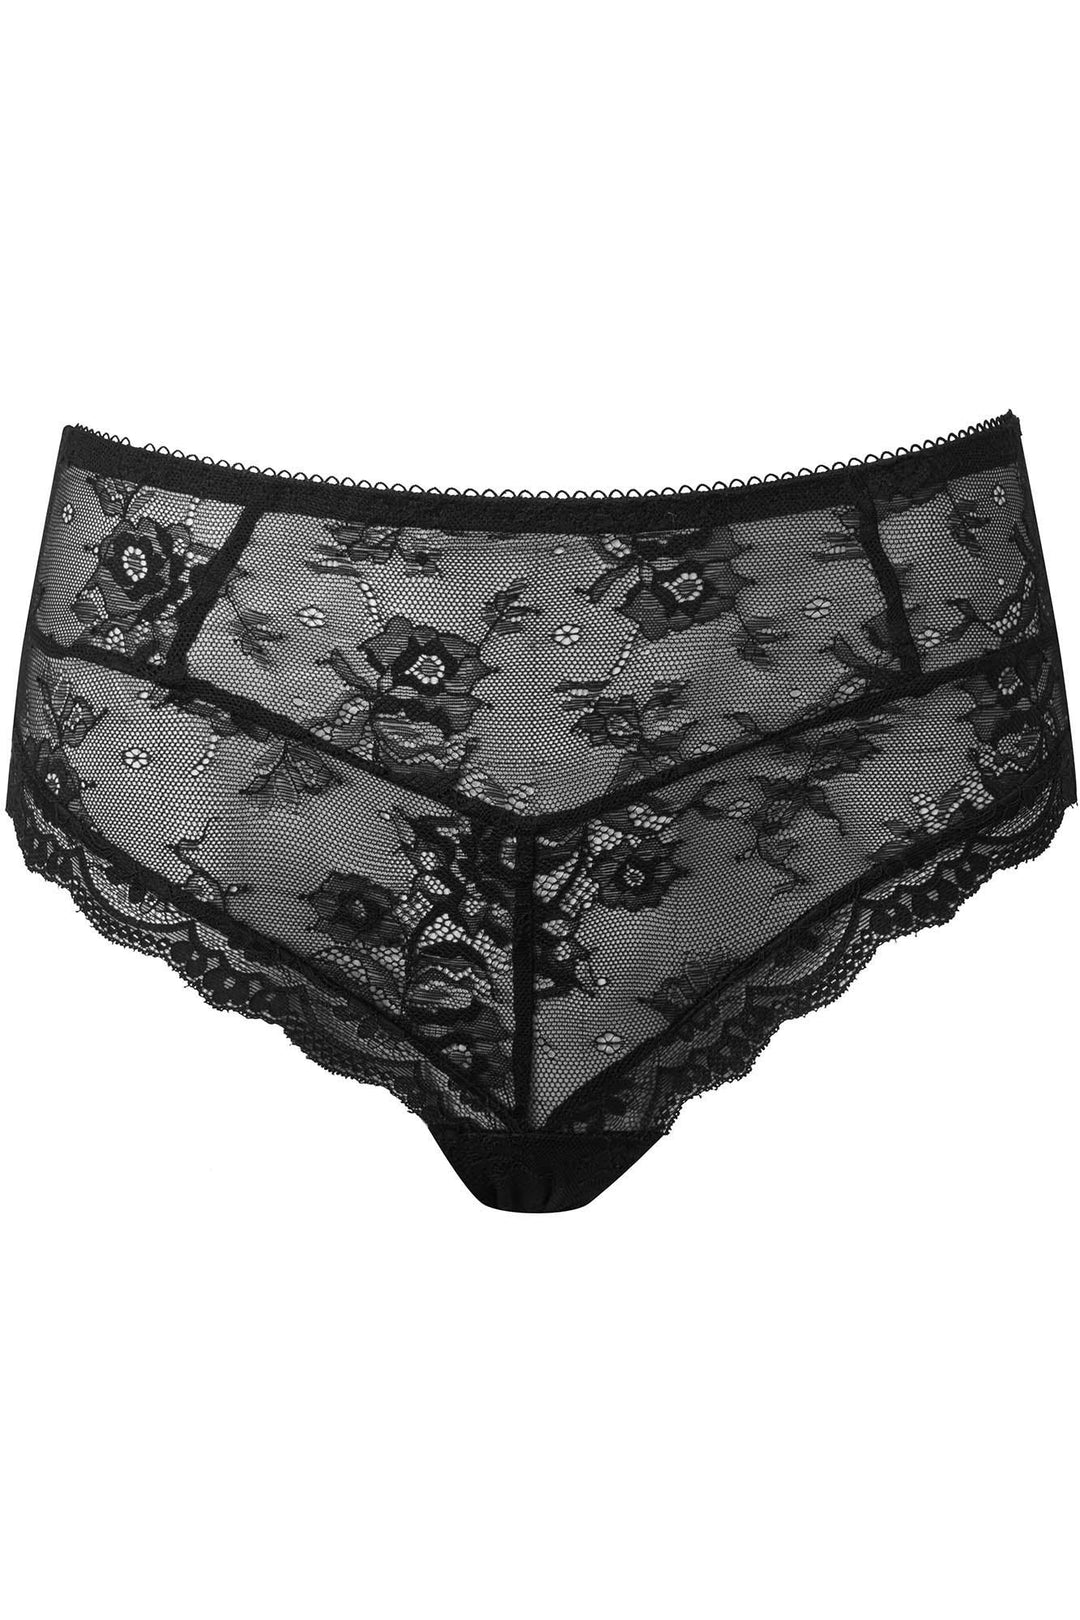 goth lace panties